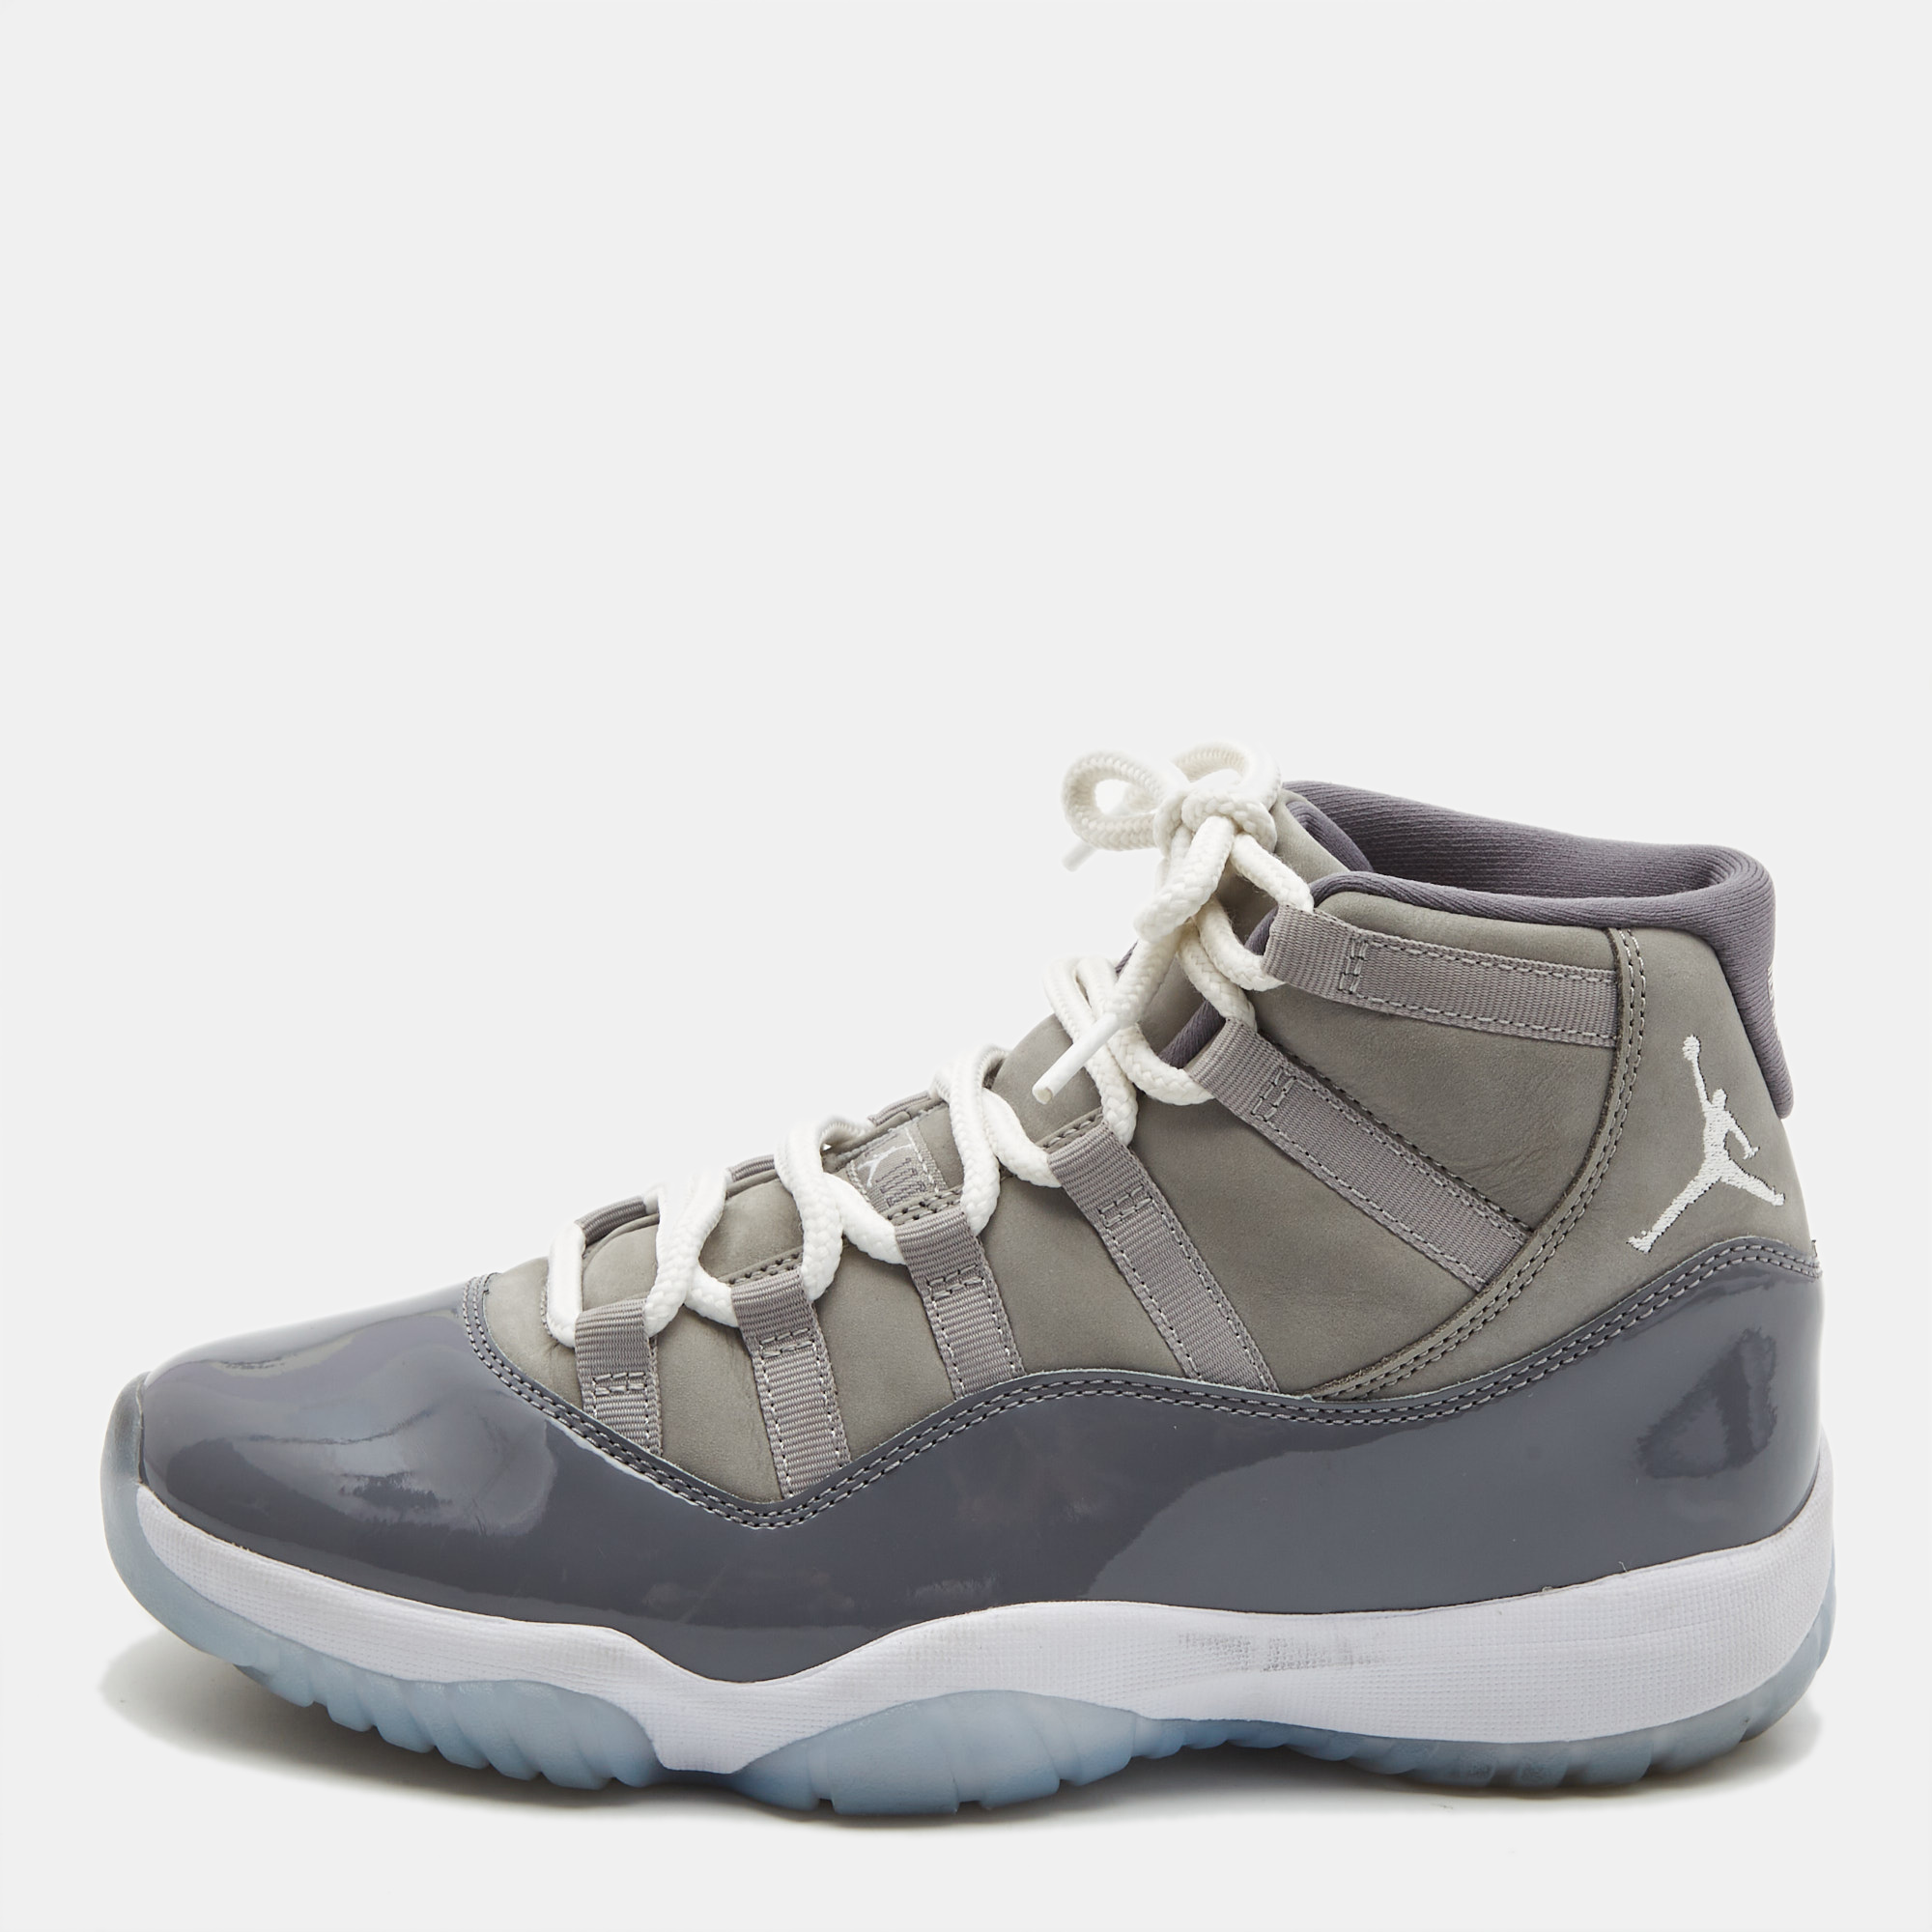 

Air Jordans Grey Patent Leather Jordan 11 Retro Cool Grey Sneakers Size 42.5